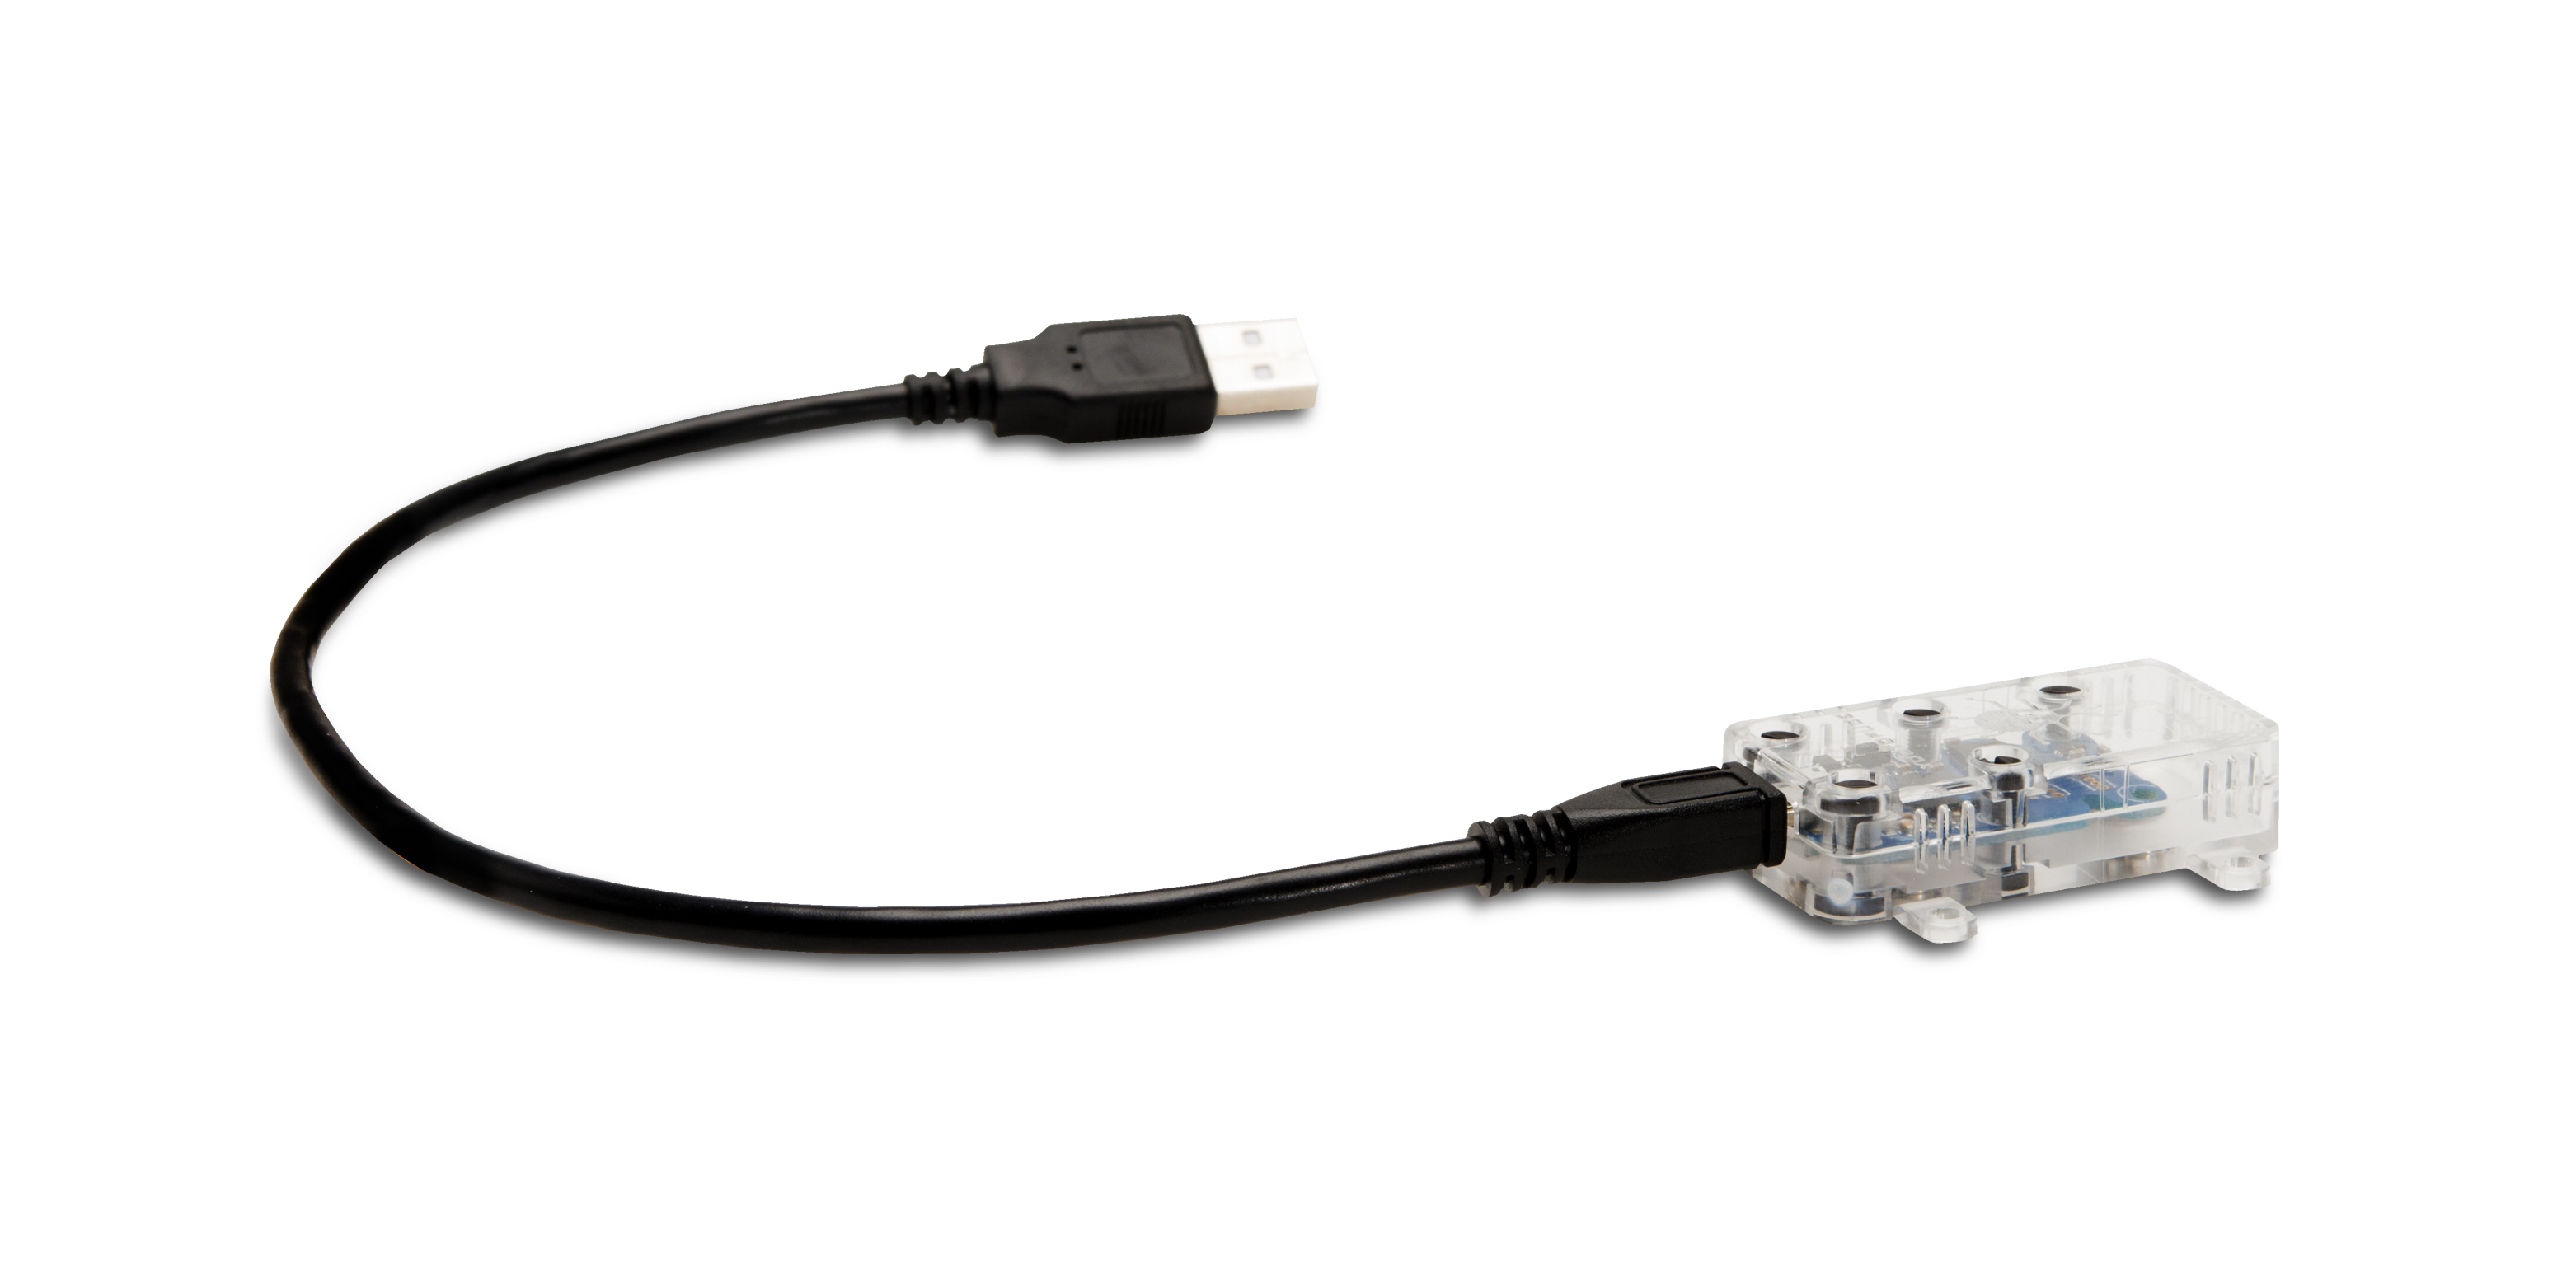 USB ambiant light sensor Yocto-Light-V3